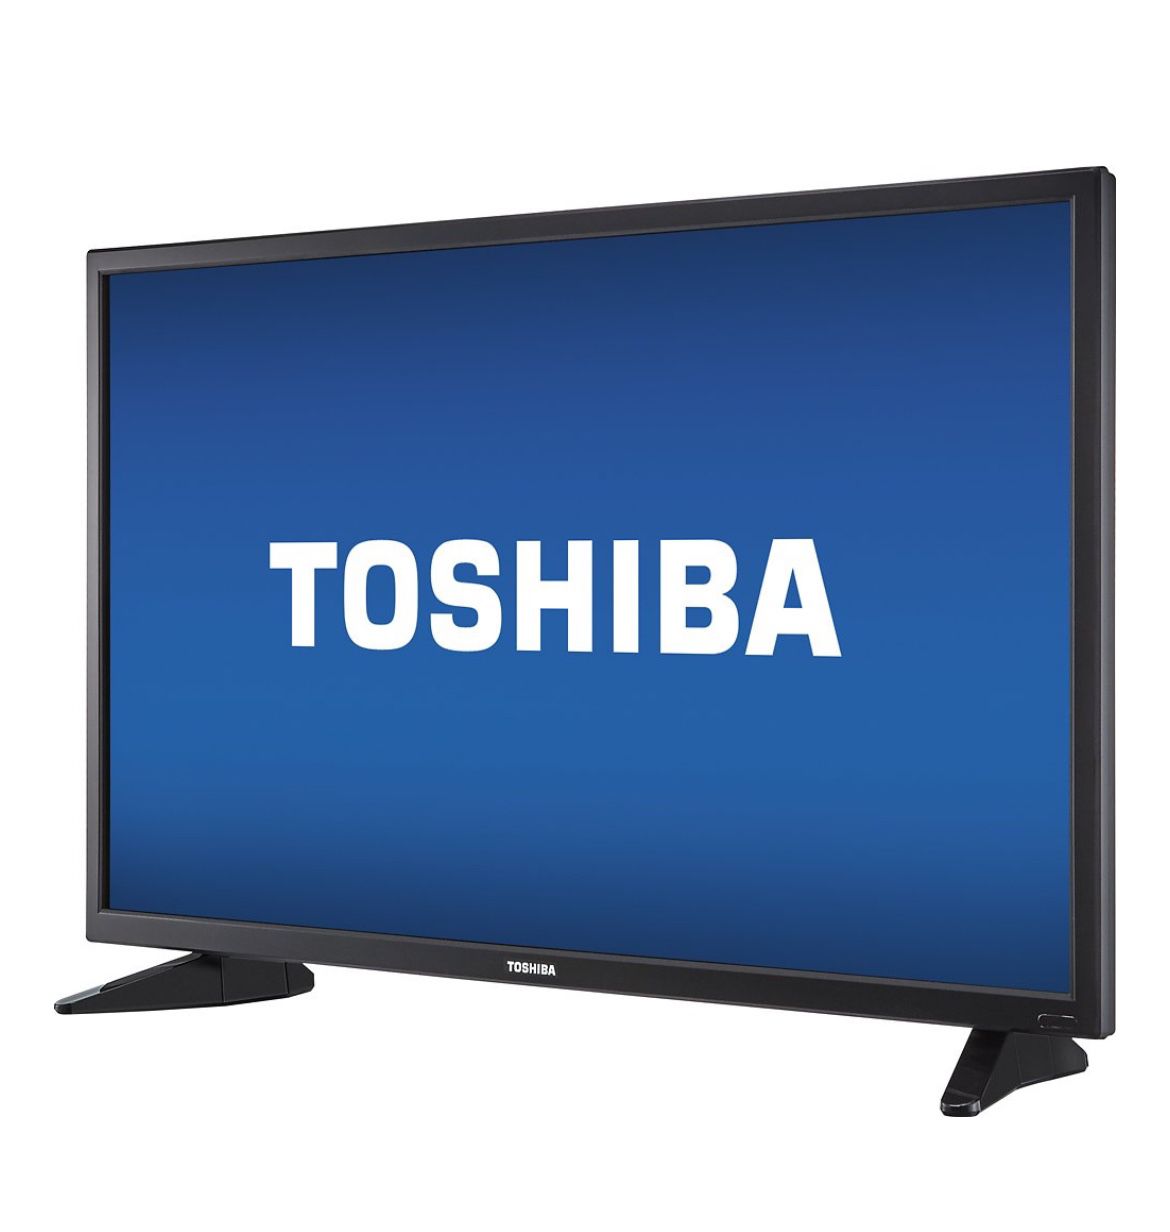 “32” Toshiba TV